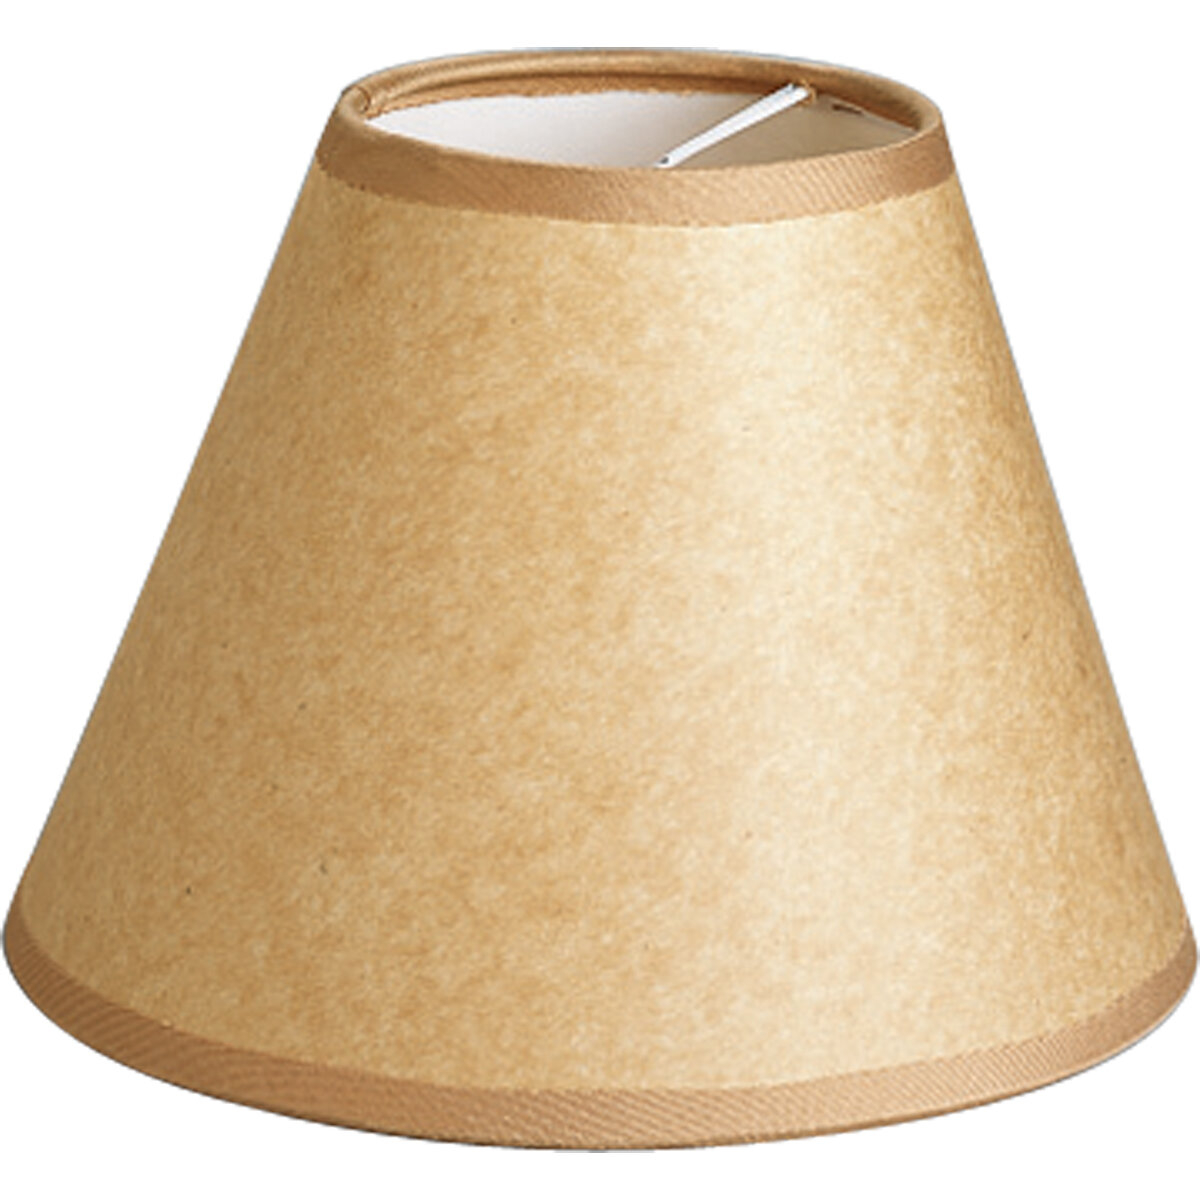 Parchment lamp shades